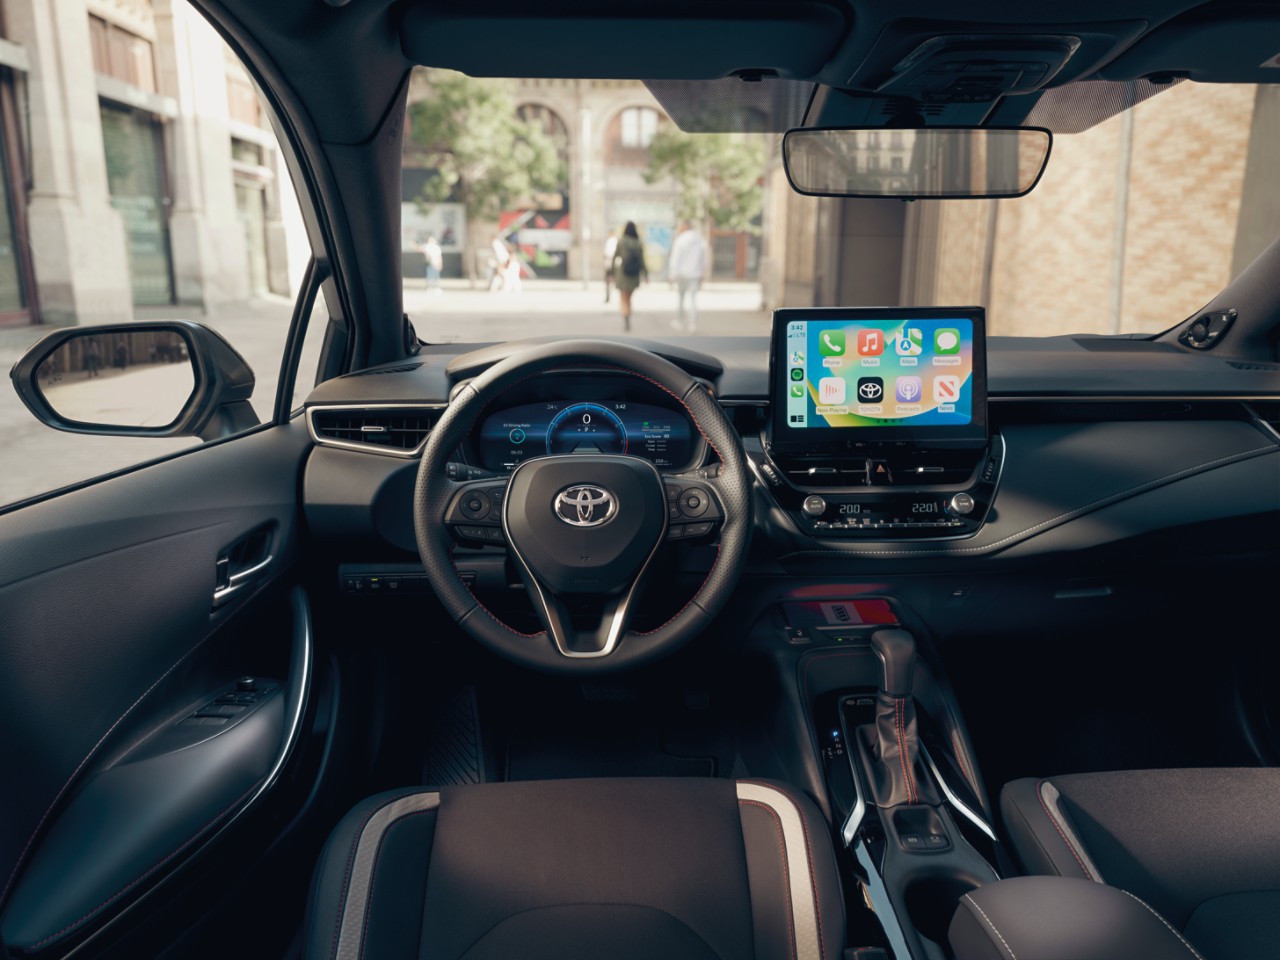 Toyota Corolla Touring Sports front interior